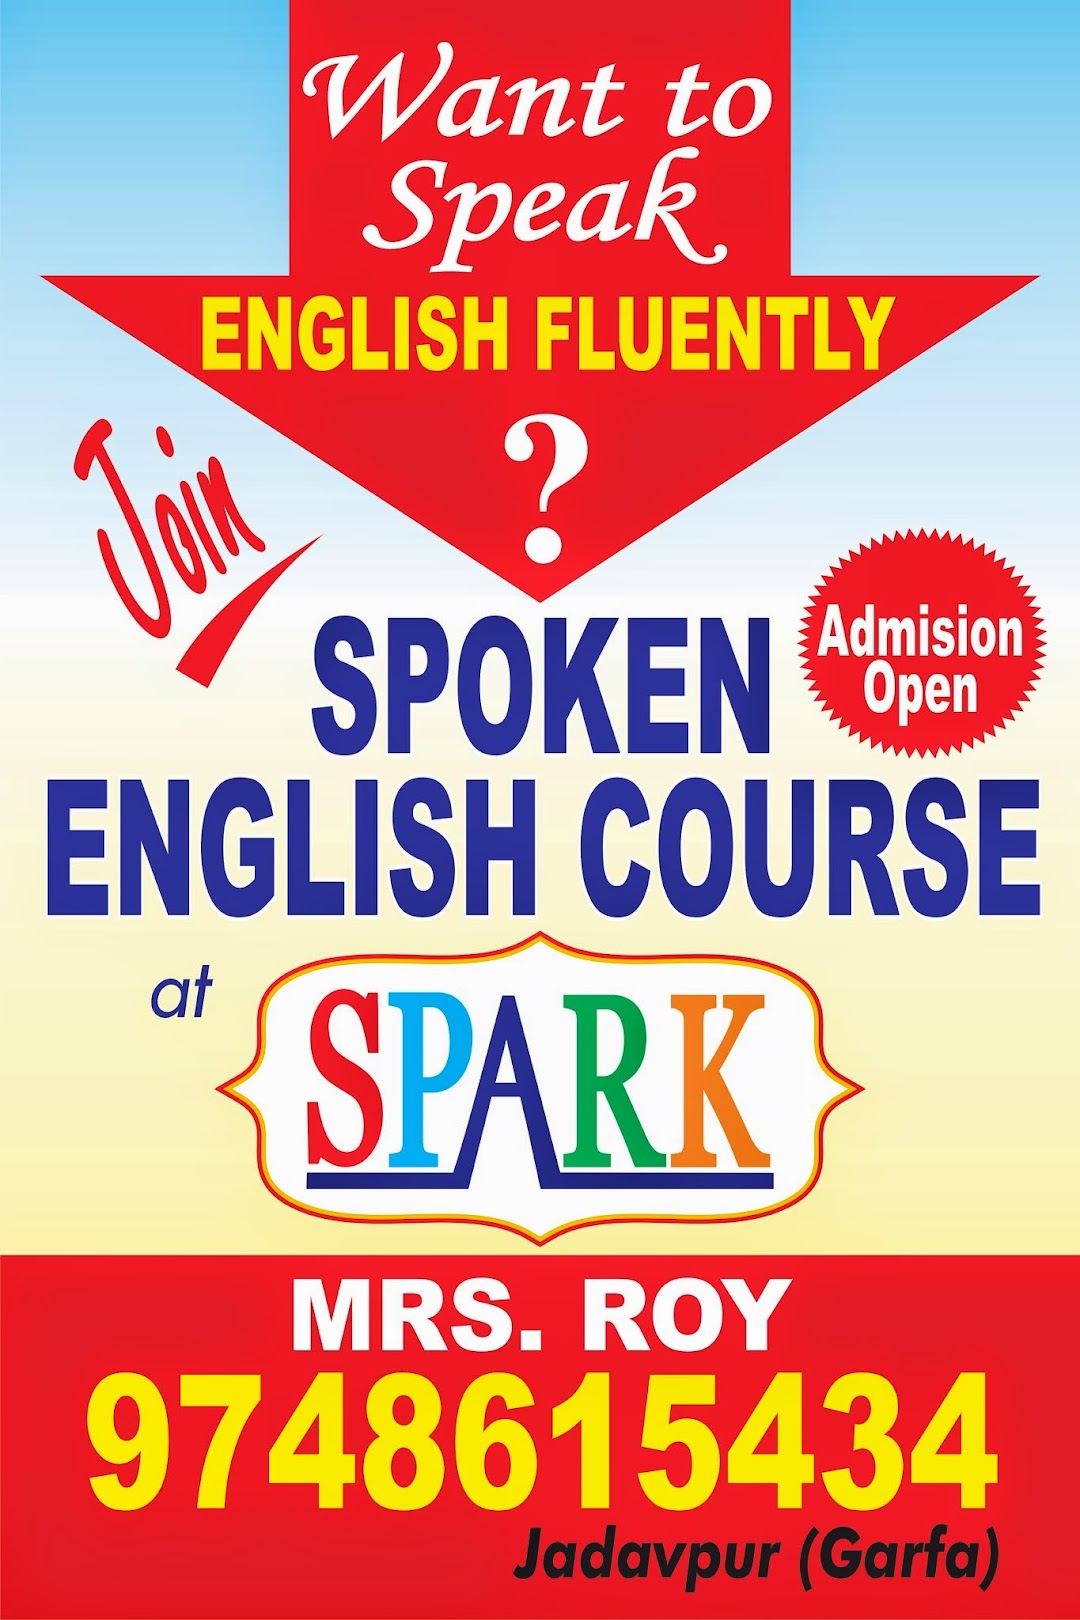 Spaark Grooming Institute | Spoken English Course, Training & Classes in Kolkata